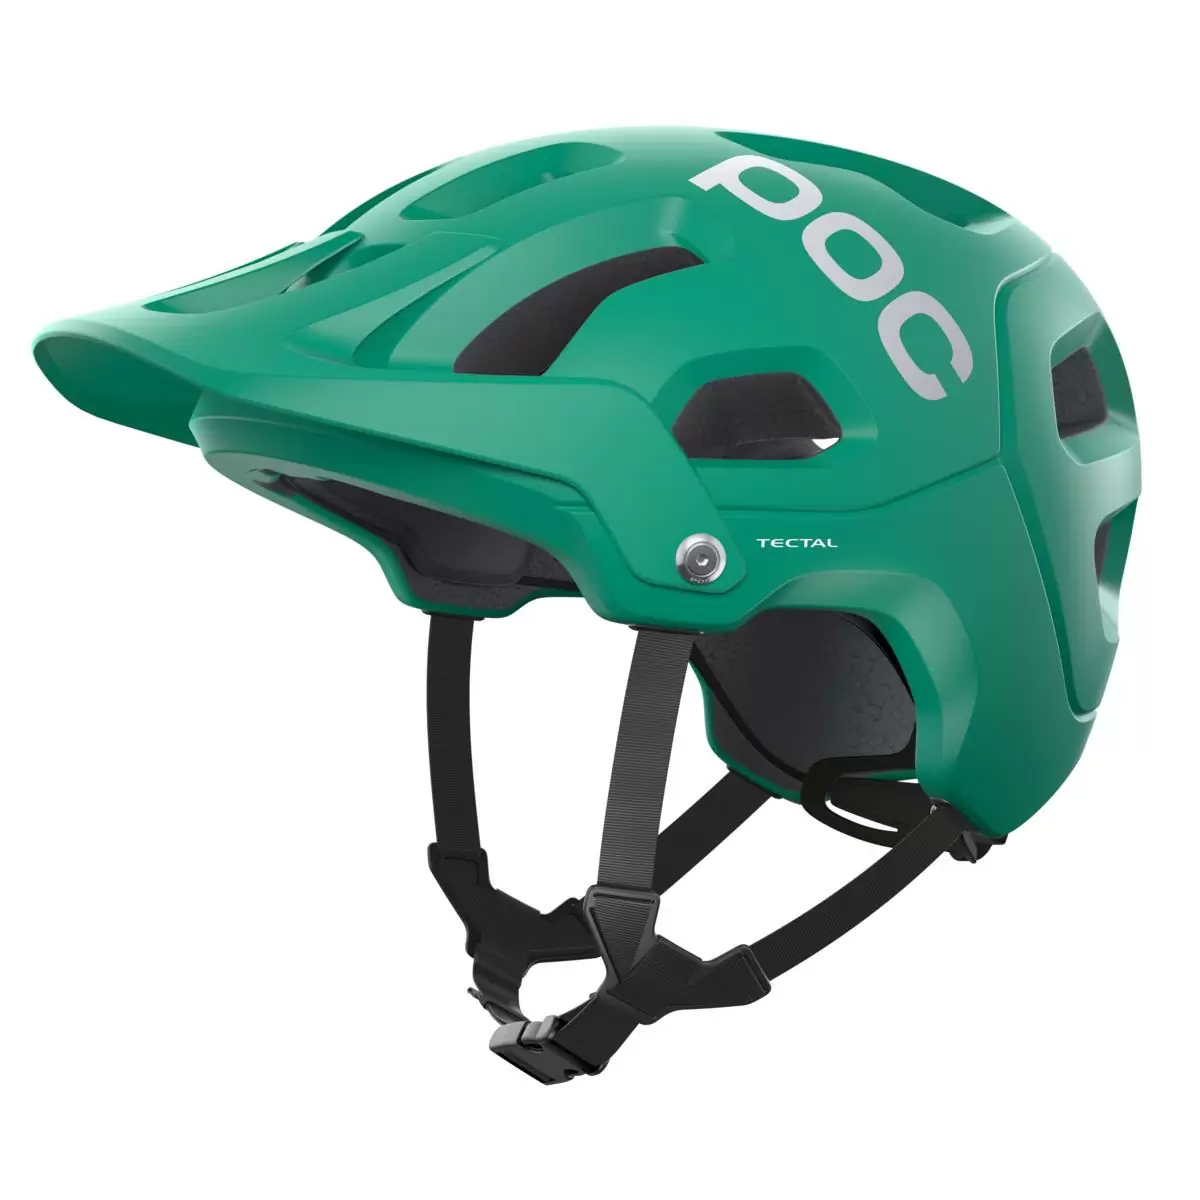 Enduro helmet Tectal Jade Green Matt size XS-S (51-54cm) - image